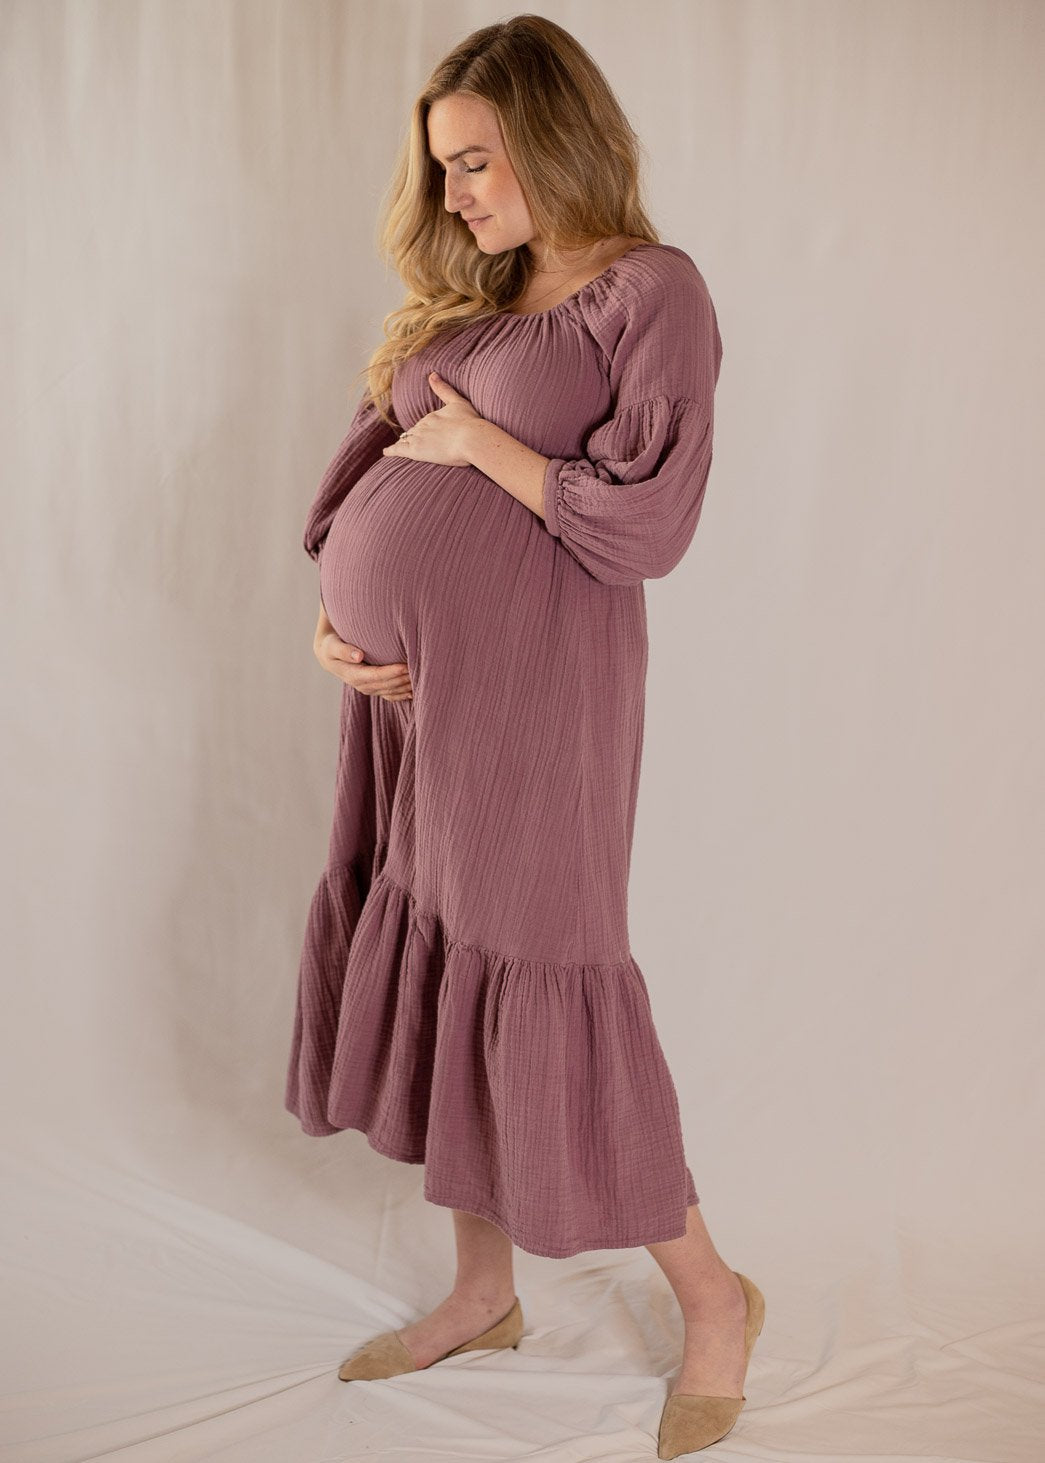 Eliza Dress Elderberry- Baby Bump Friendly Dress